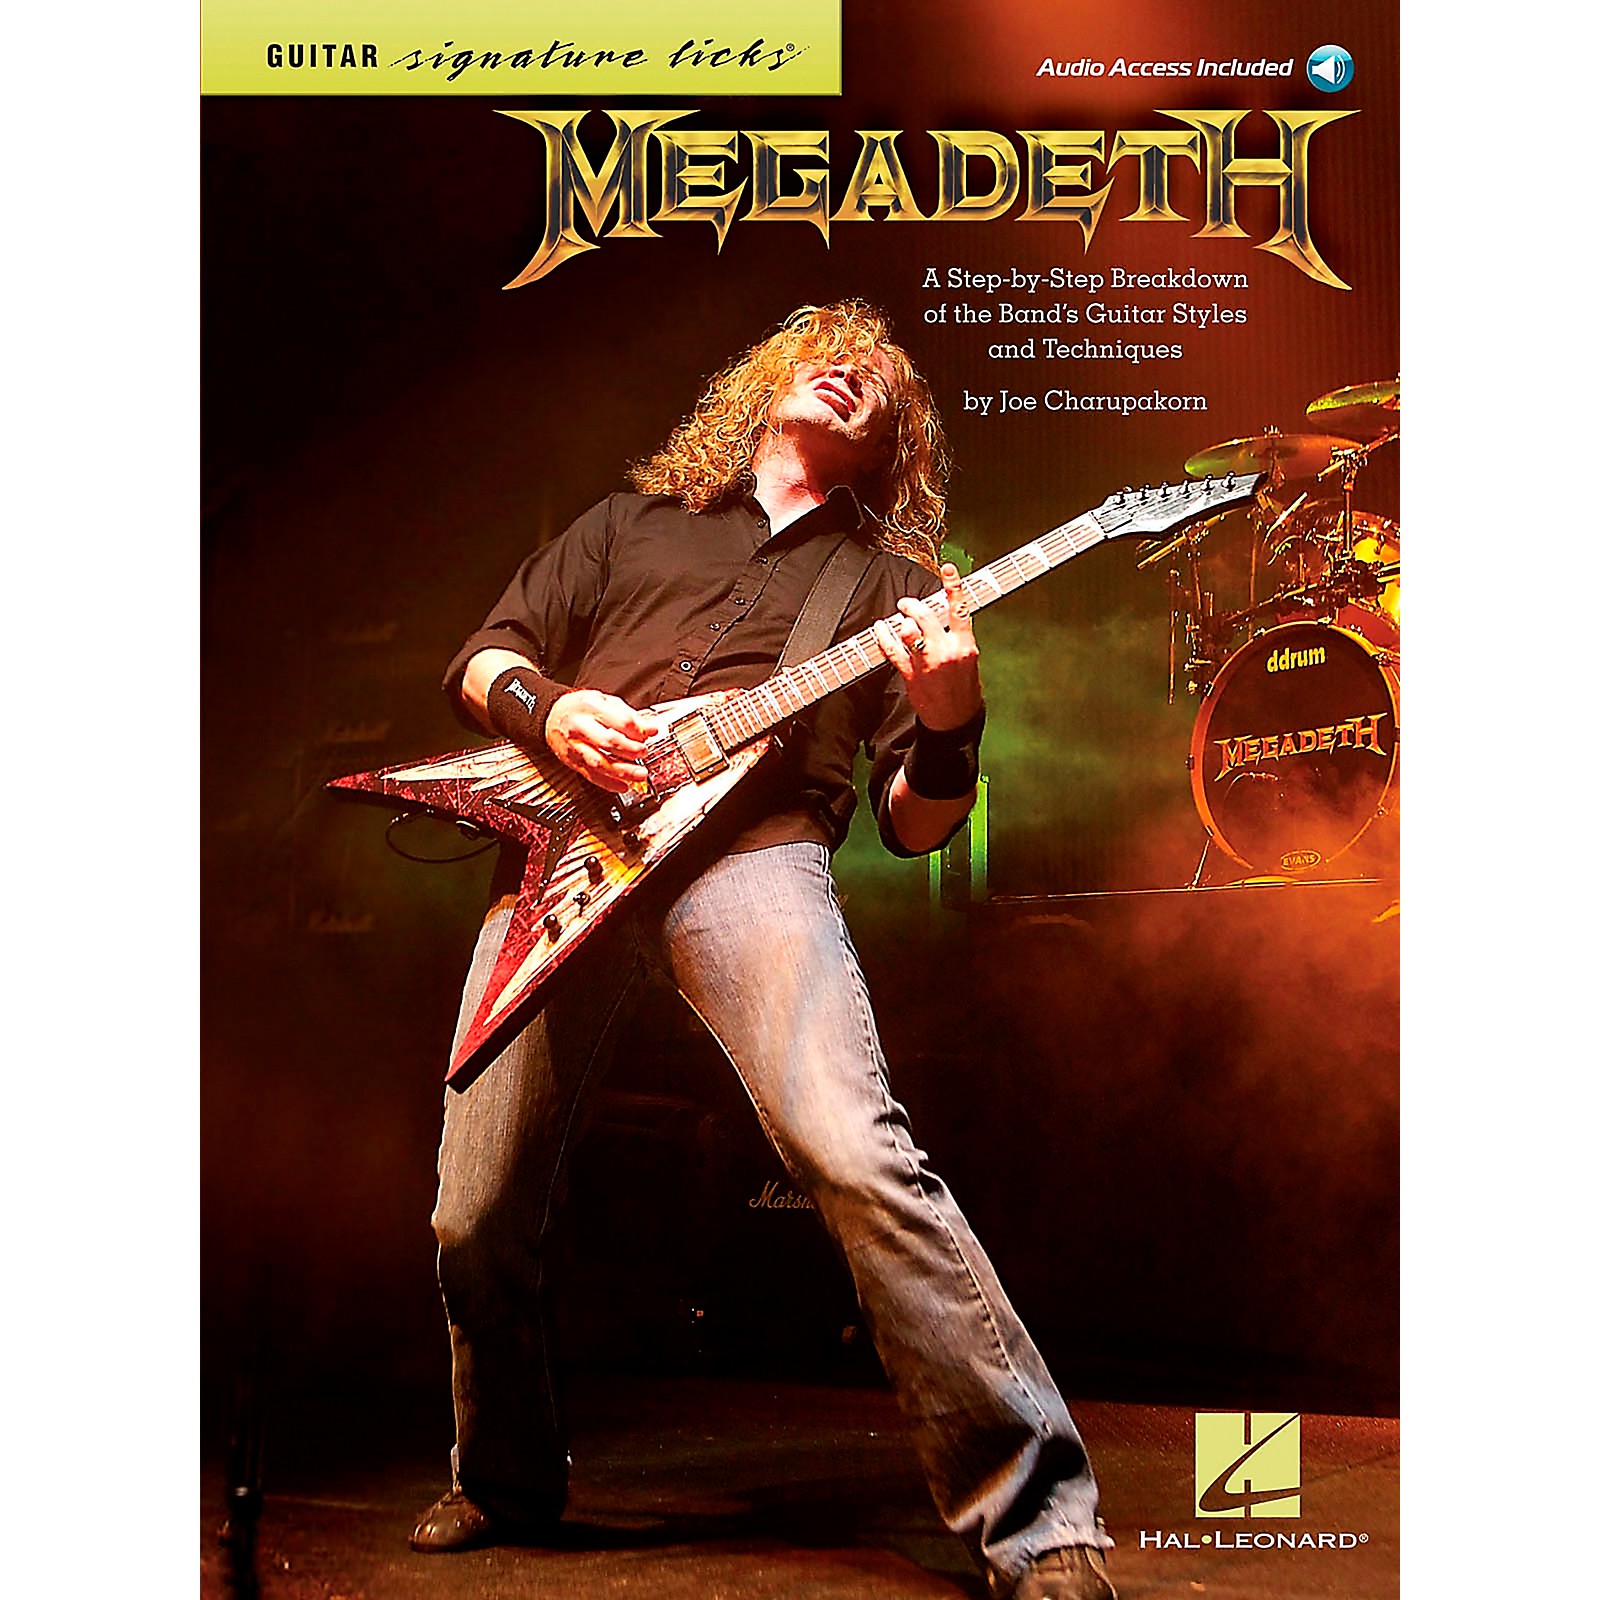 Psychotron by Megadeth - Guitar Tab - Guitar Instructor